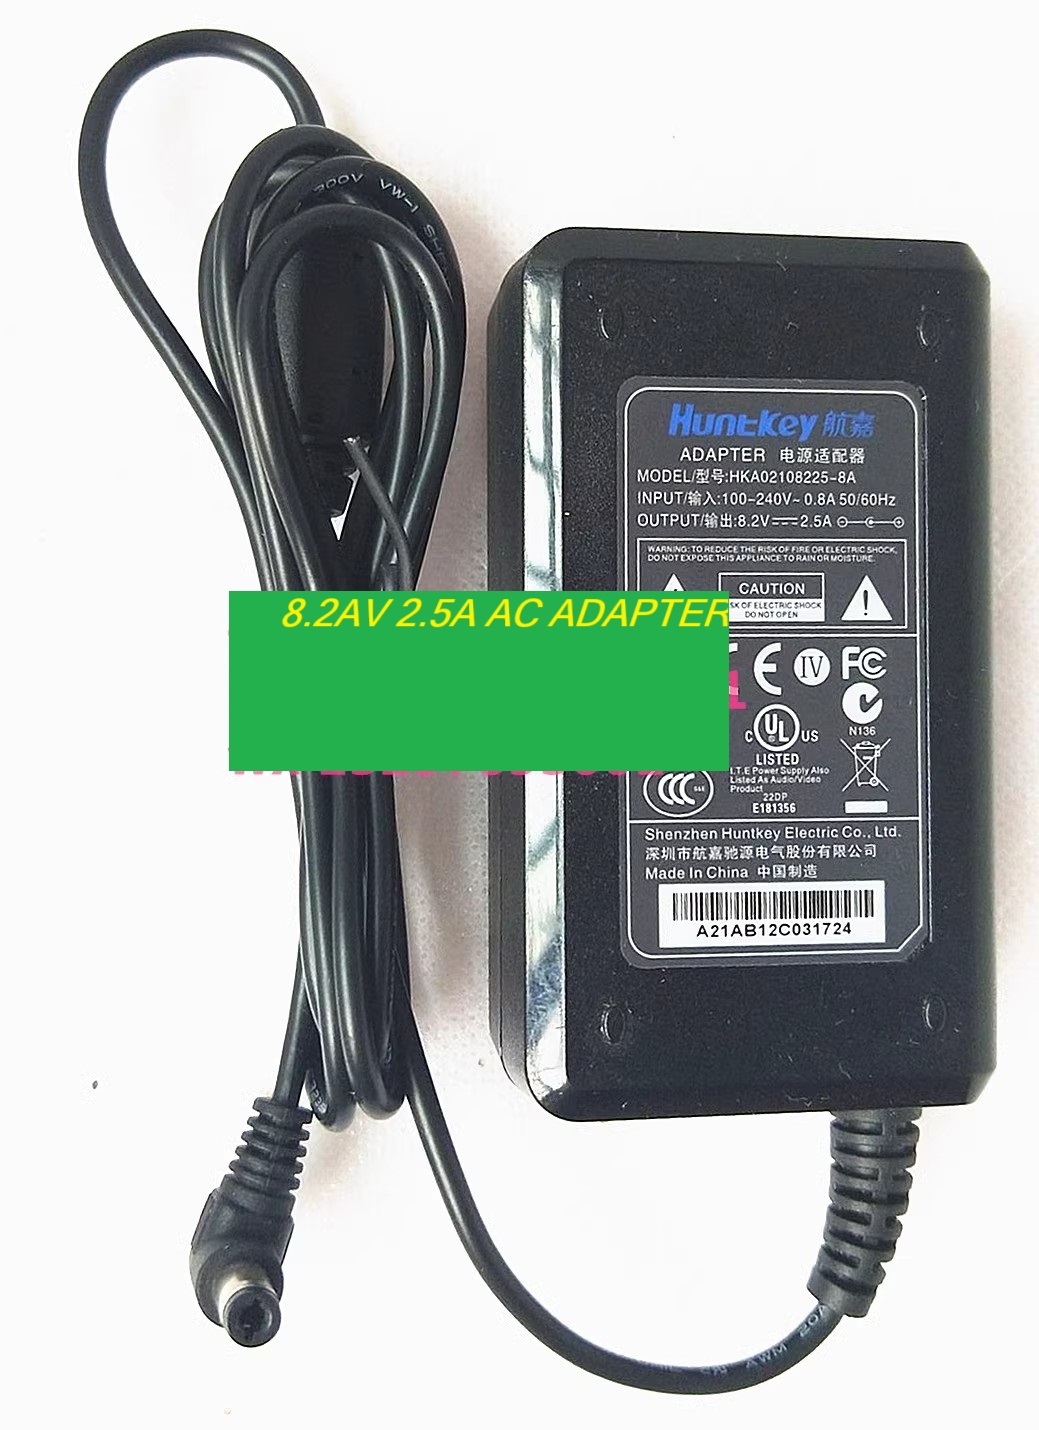 *Brand NEW*Huntkey HKA02108225-8A 8.2AV 2.5A AC ADAPTER Power Supply